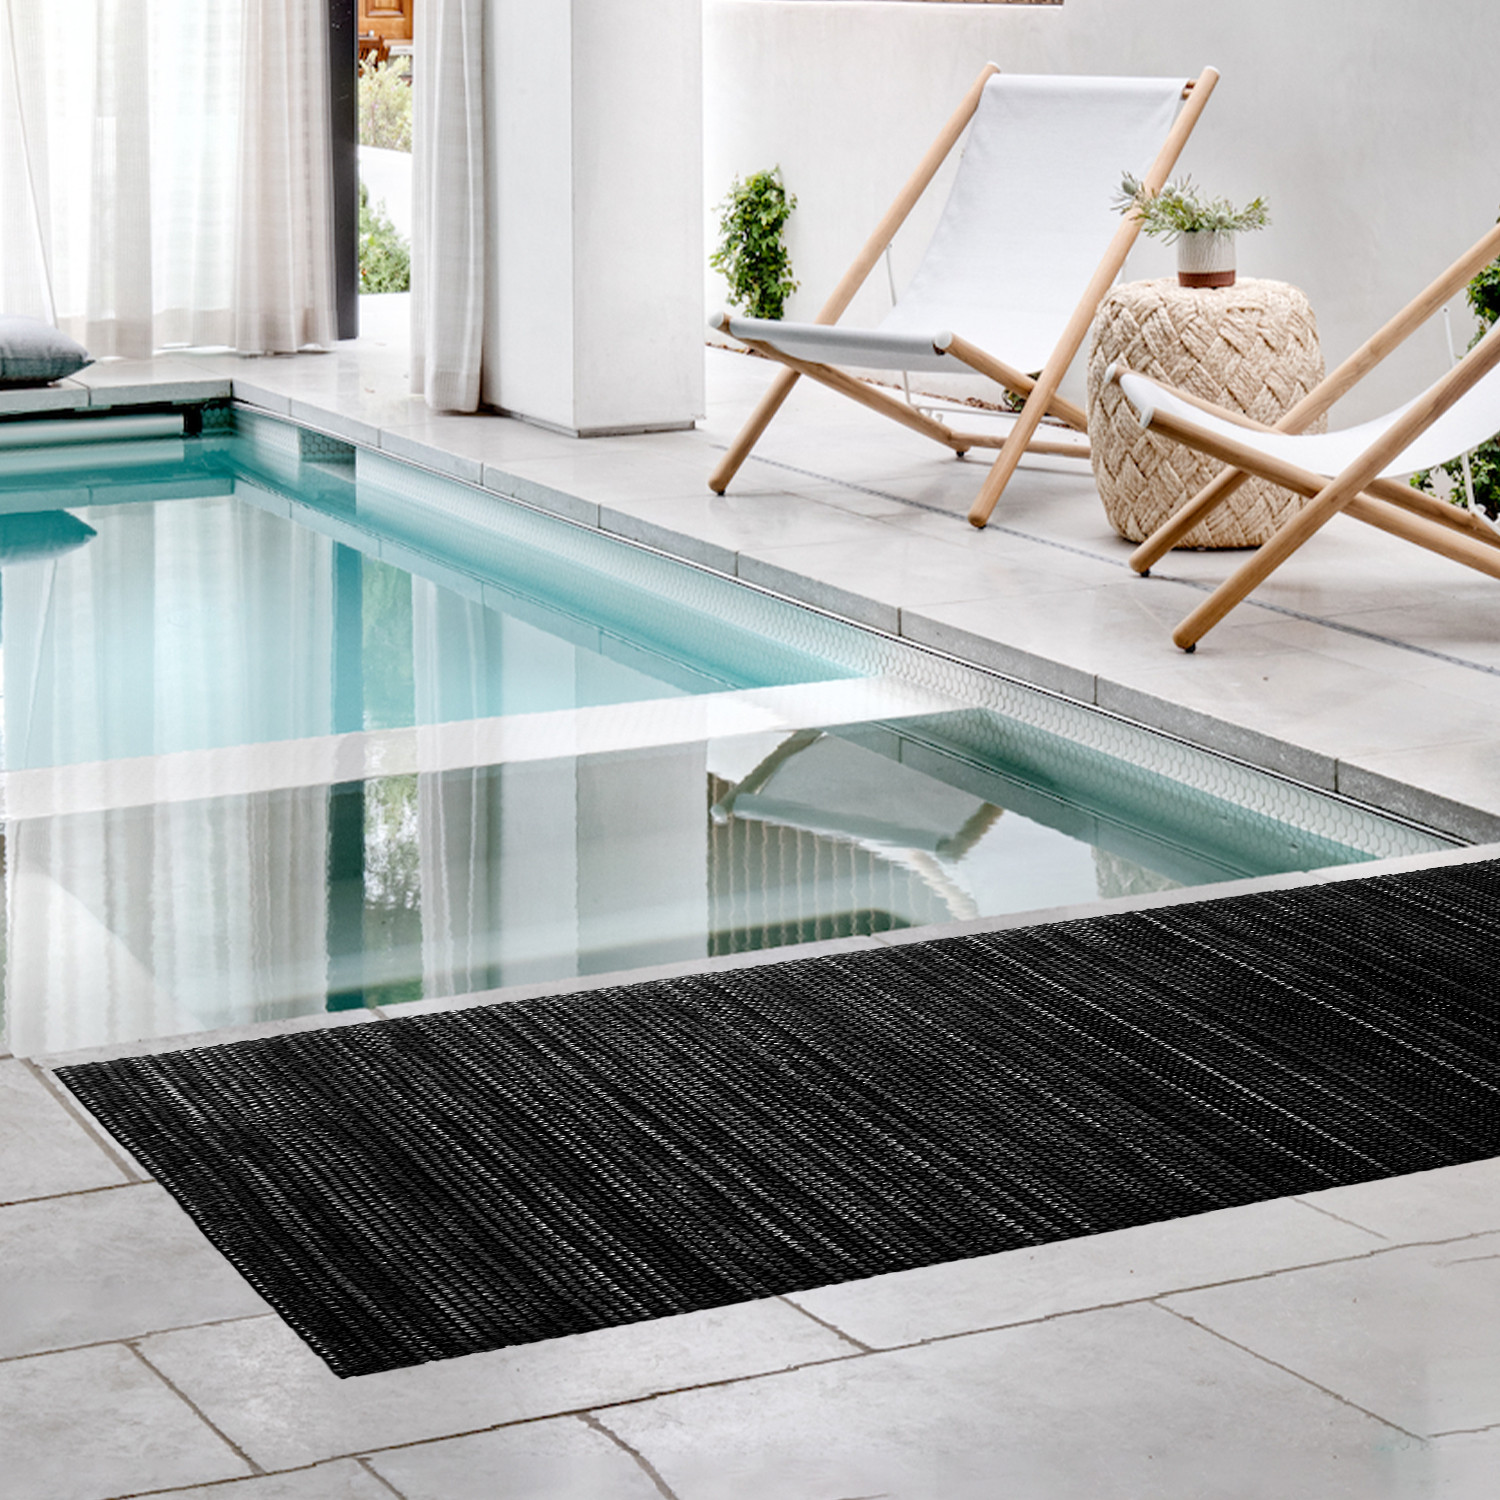 Kuber Industries Rubber Waterproof Anti-Skid Swimming Pool Mat|Shower Mat|Rainmat For Entrance Area,Bathroom,2 x 5 Feet (Black)